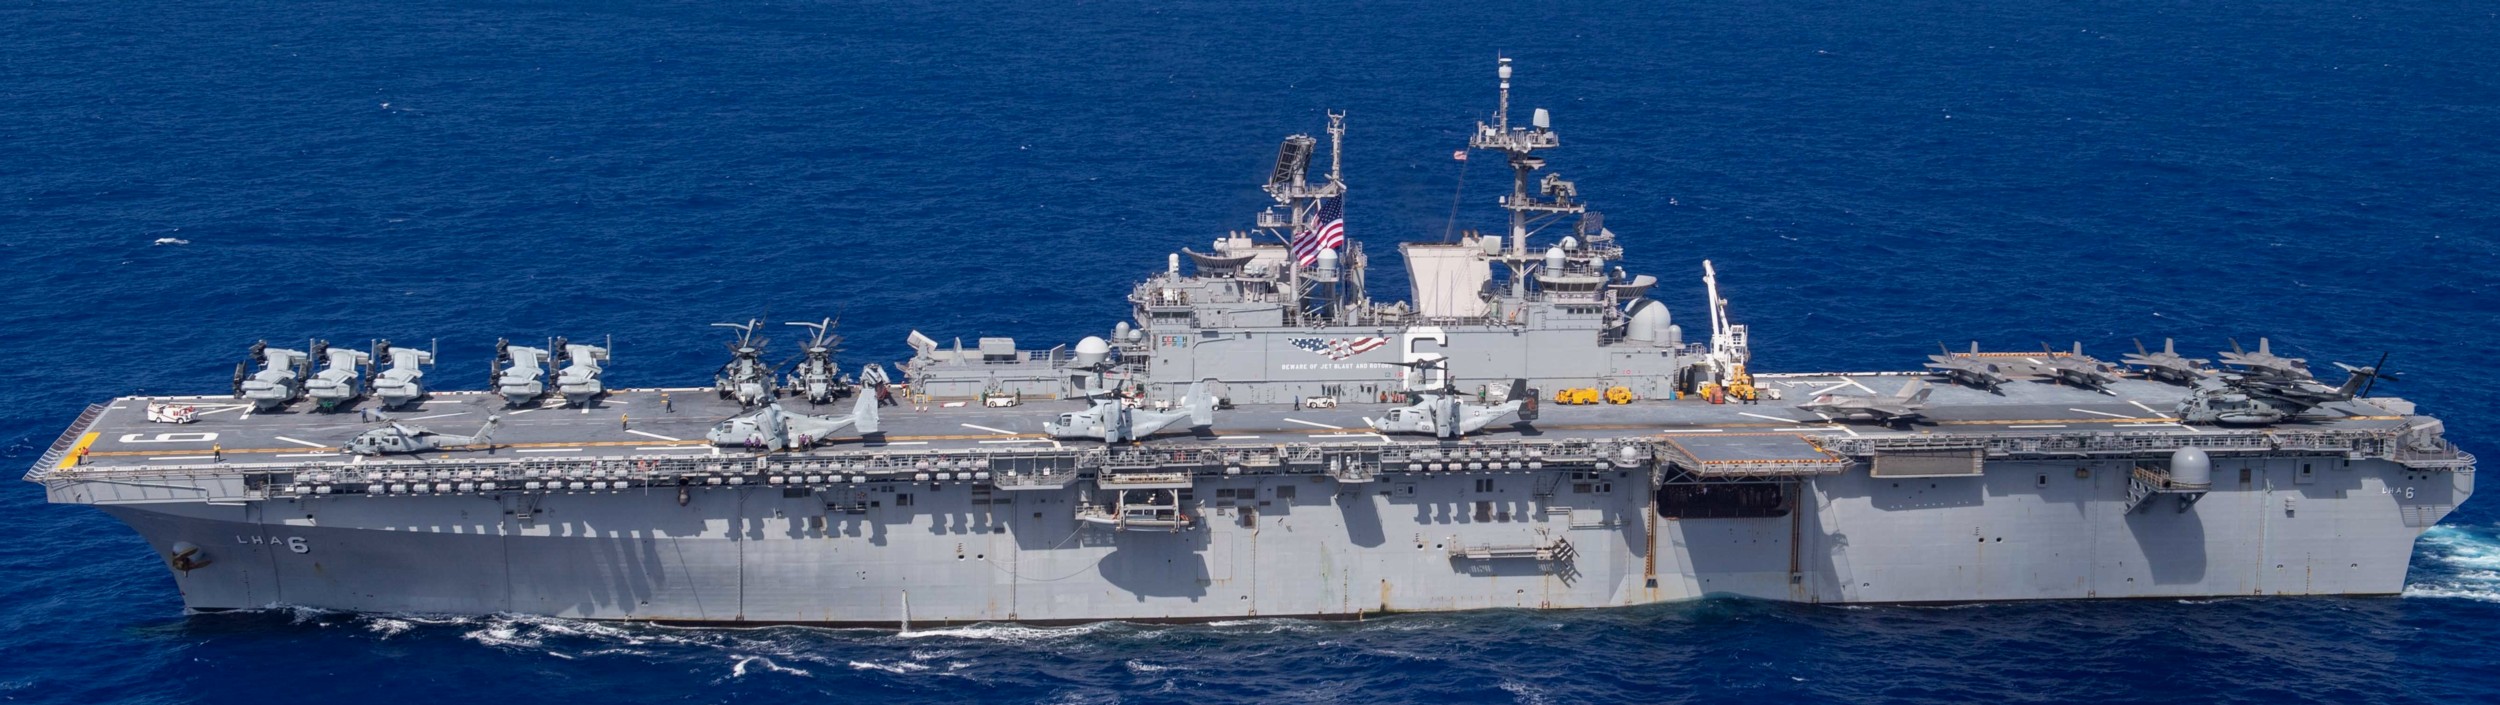 lha-6 uss america amphibious assault ship landing us navy marines vmm-265 158